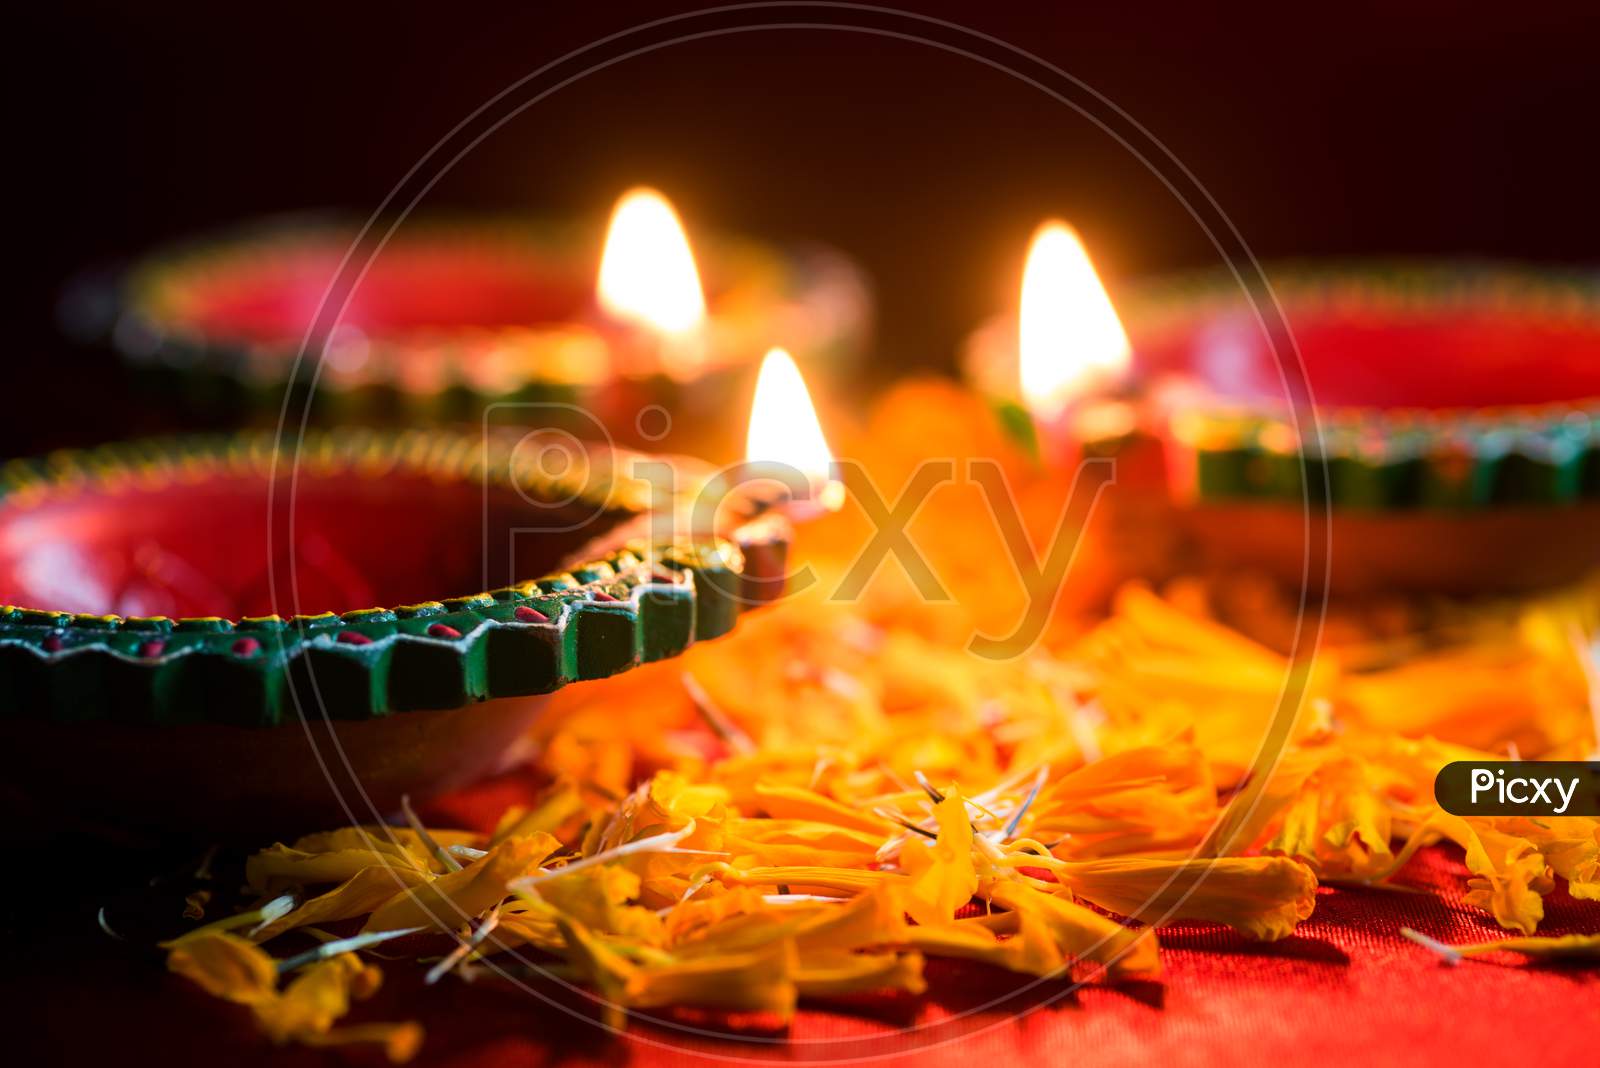 Happy Diwali - Clay Diya Lamps Lit During Diwali Celebration. Greetings Card Design Of Indian Hindu Light Festival Called Diwali